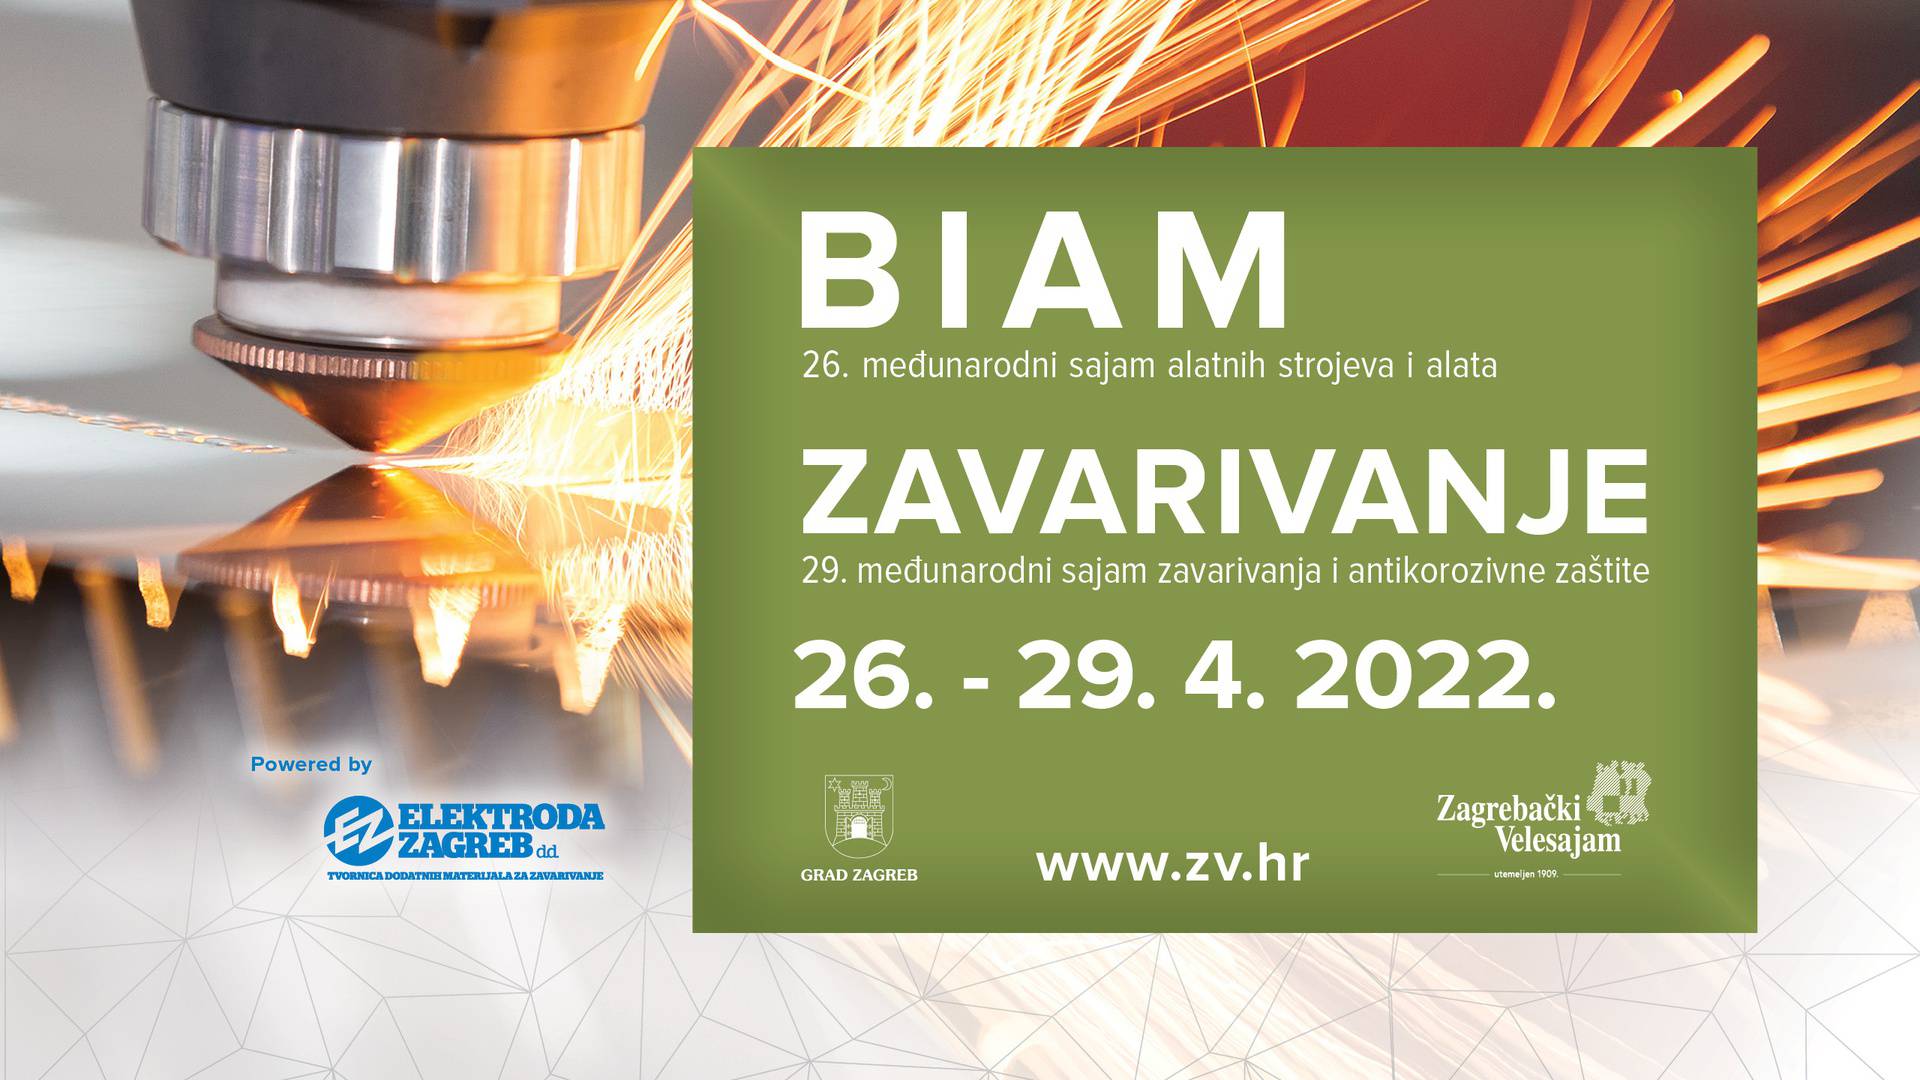 Biam i Zavarivanje Powered by Elektroda Zagreb d.d.